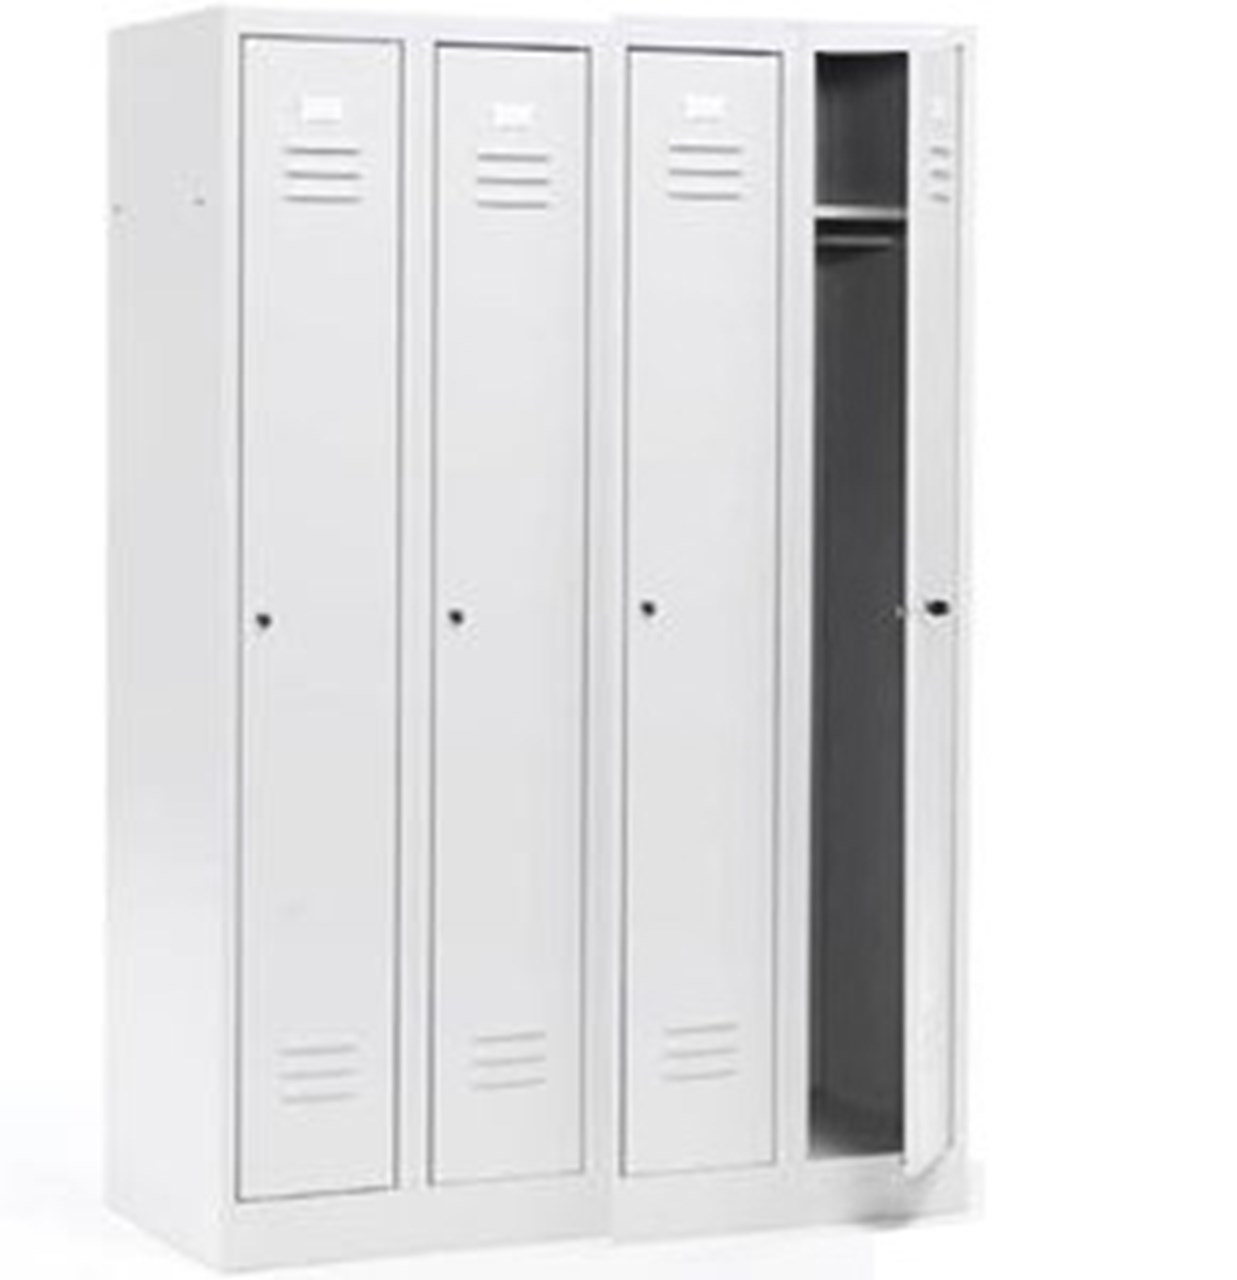 Four-piece metal locker